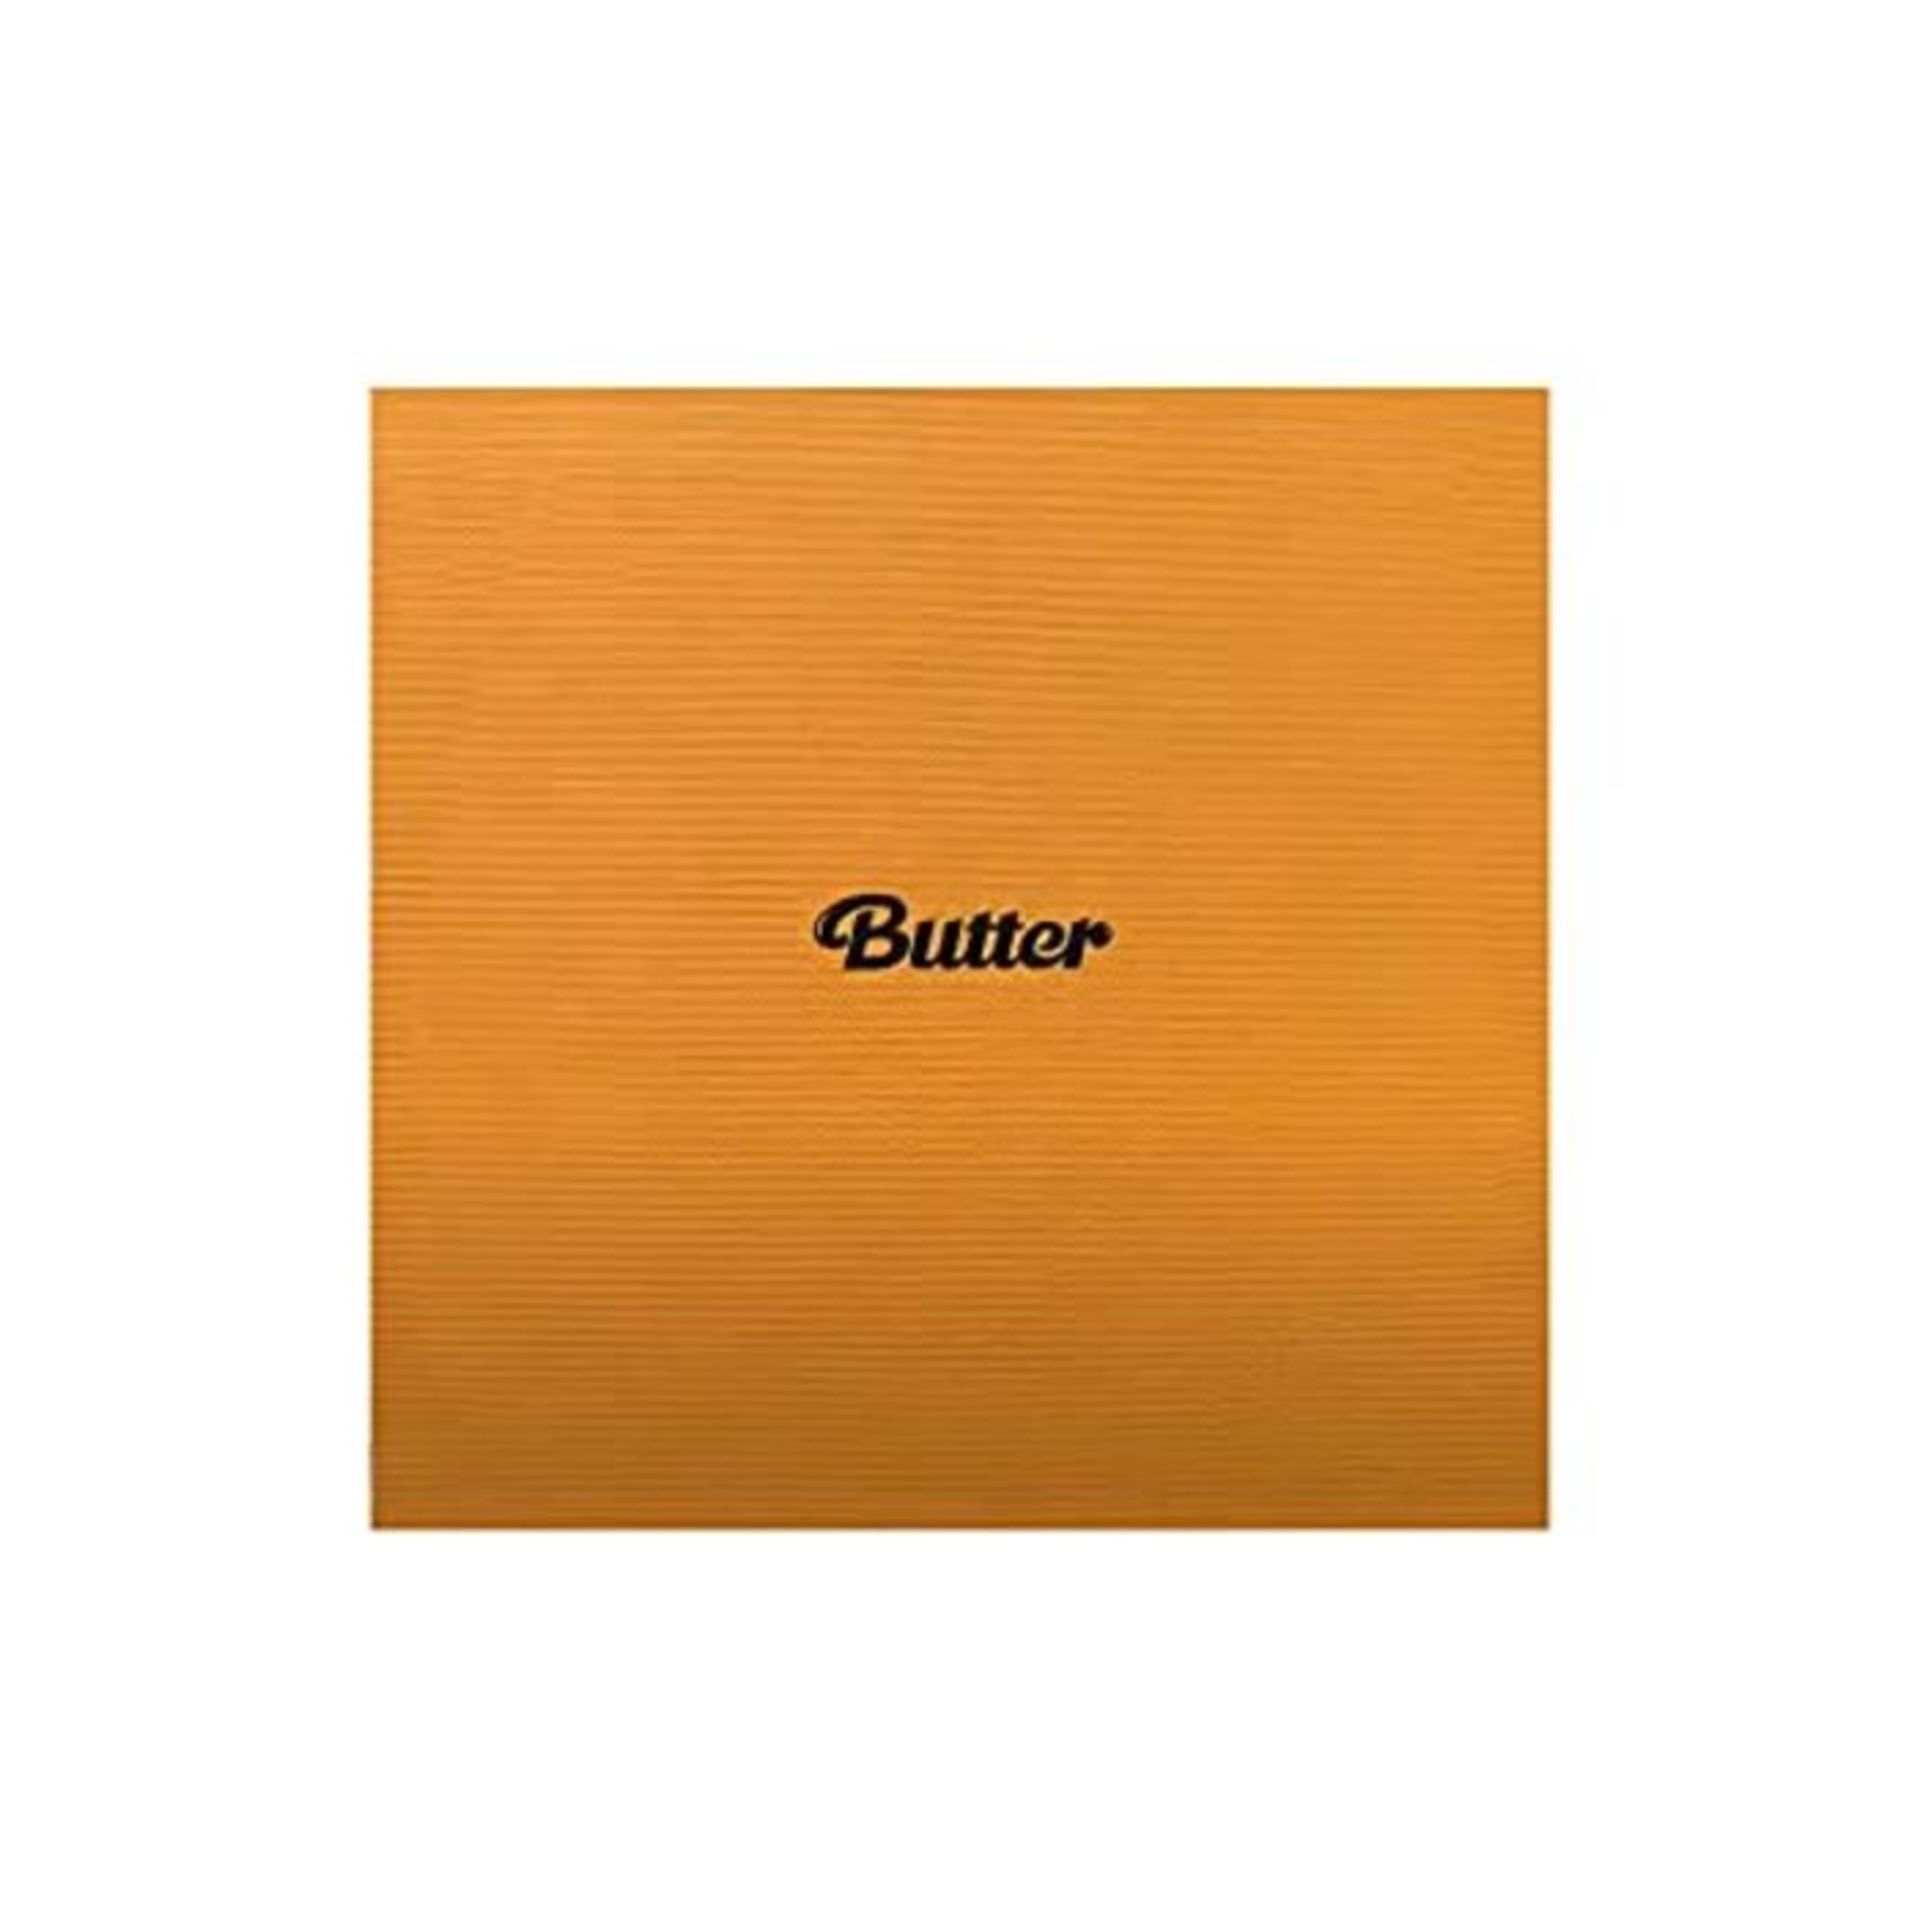 BTS Butter Album [Cream Version] CD+Photobook+Lyric Cards+Instant Photo Card+Photo Sta